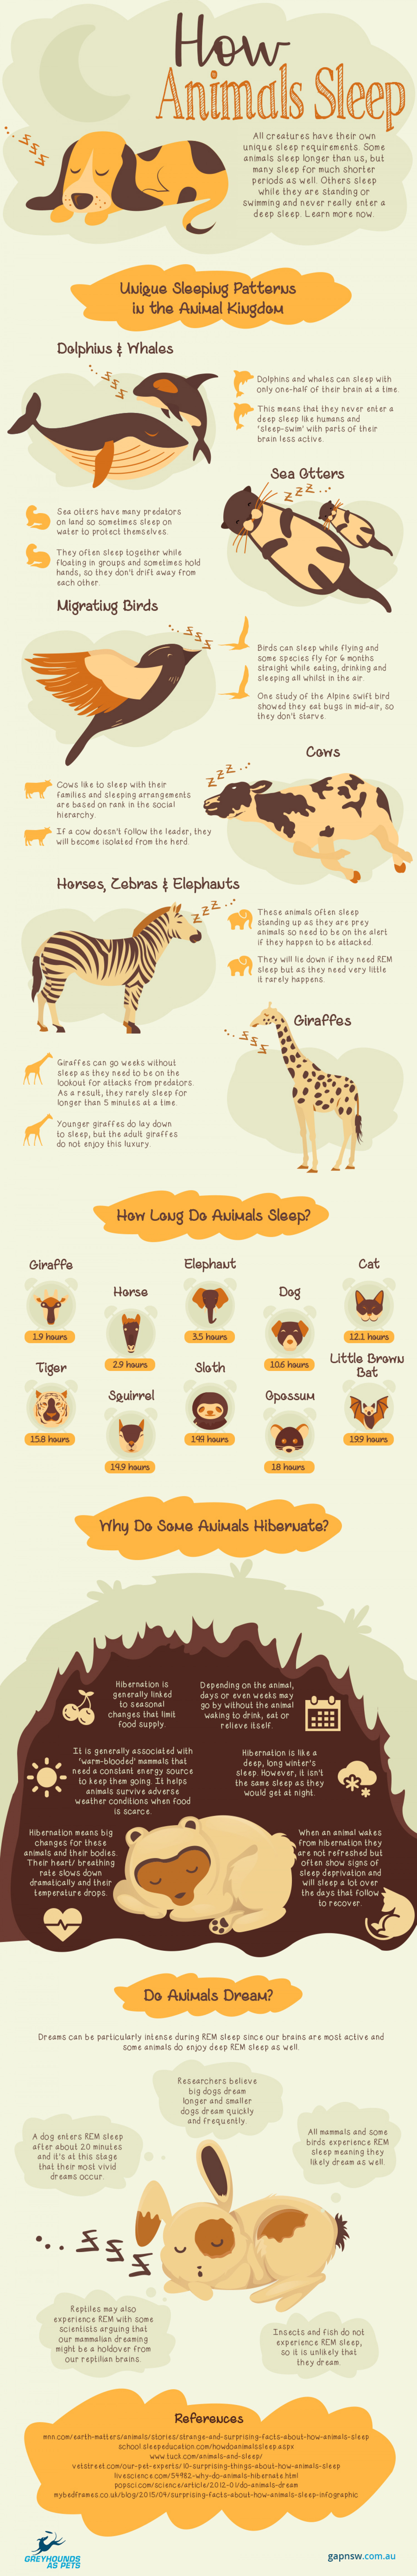 Animal sleeping habits